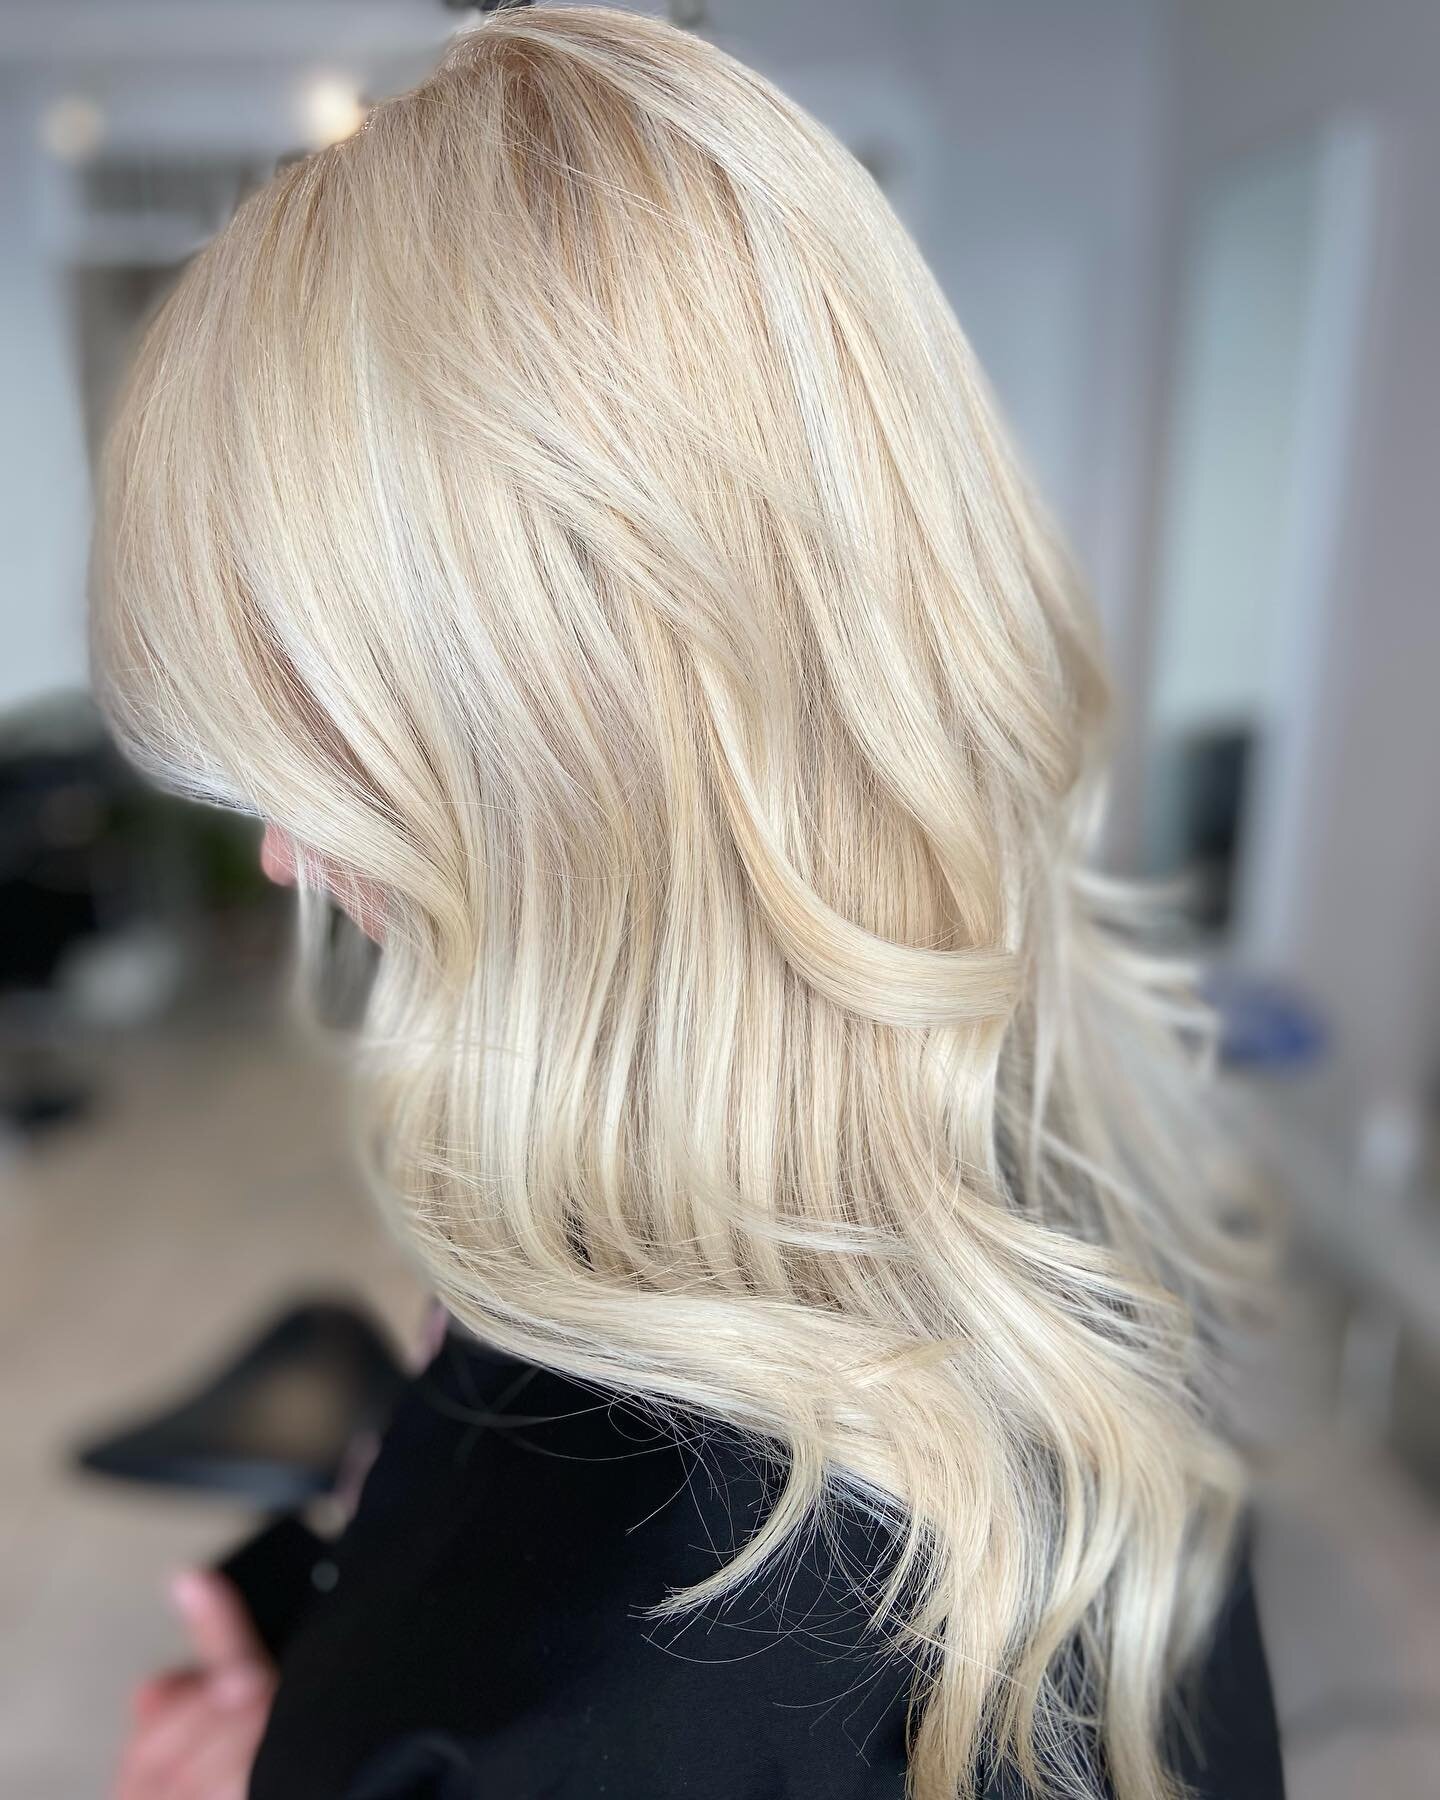 Gl&ouml;m inte och boka in din tid innan sommarn 🌸☀️

#fris&ouml;rstockholm #hair #wella #color #mariatorget
#olaplexsweden #balayage #babylights #blond #blondehair #herrklippning #s&ouml;dermalm #fris&ouml;r #hornsgatan #highlights #haircolor #h&ar